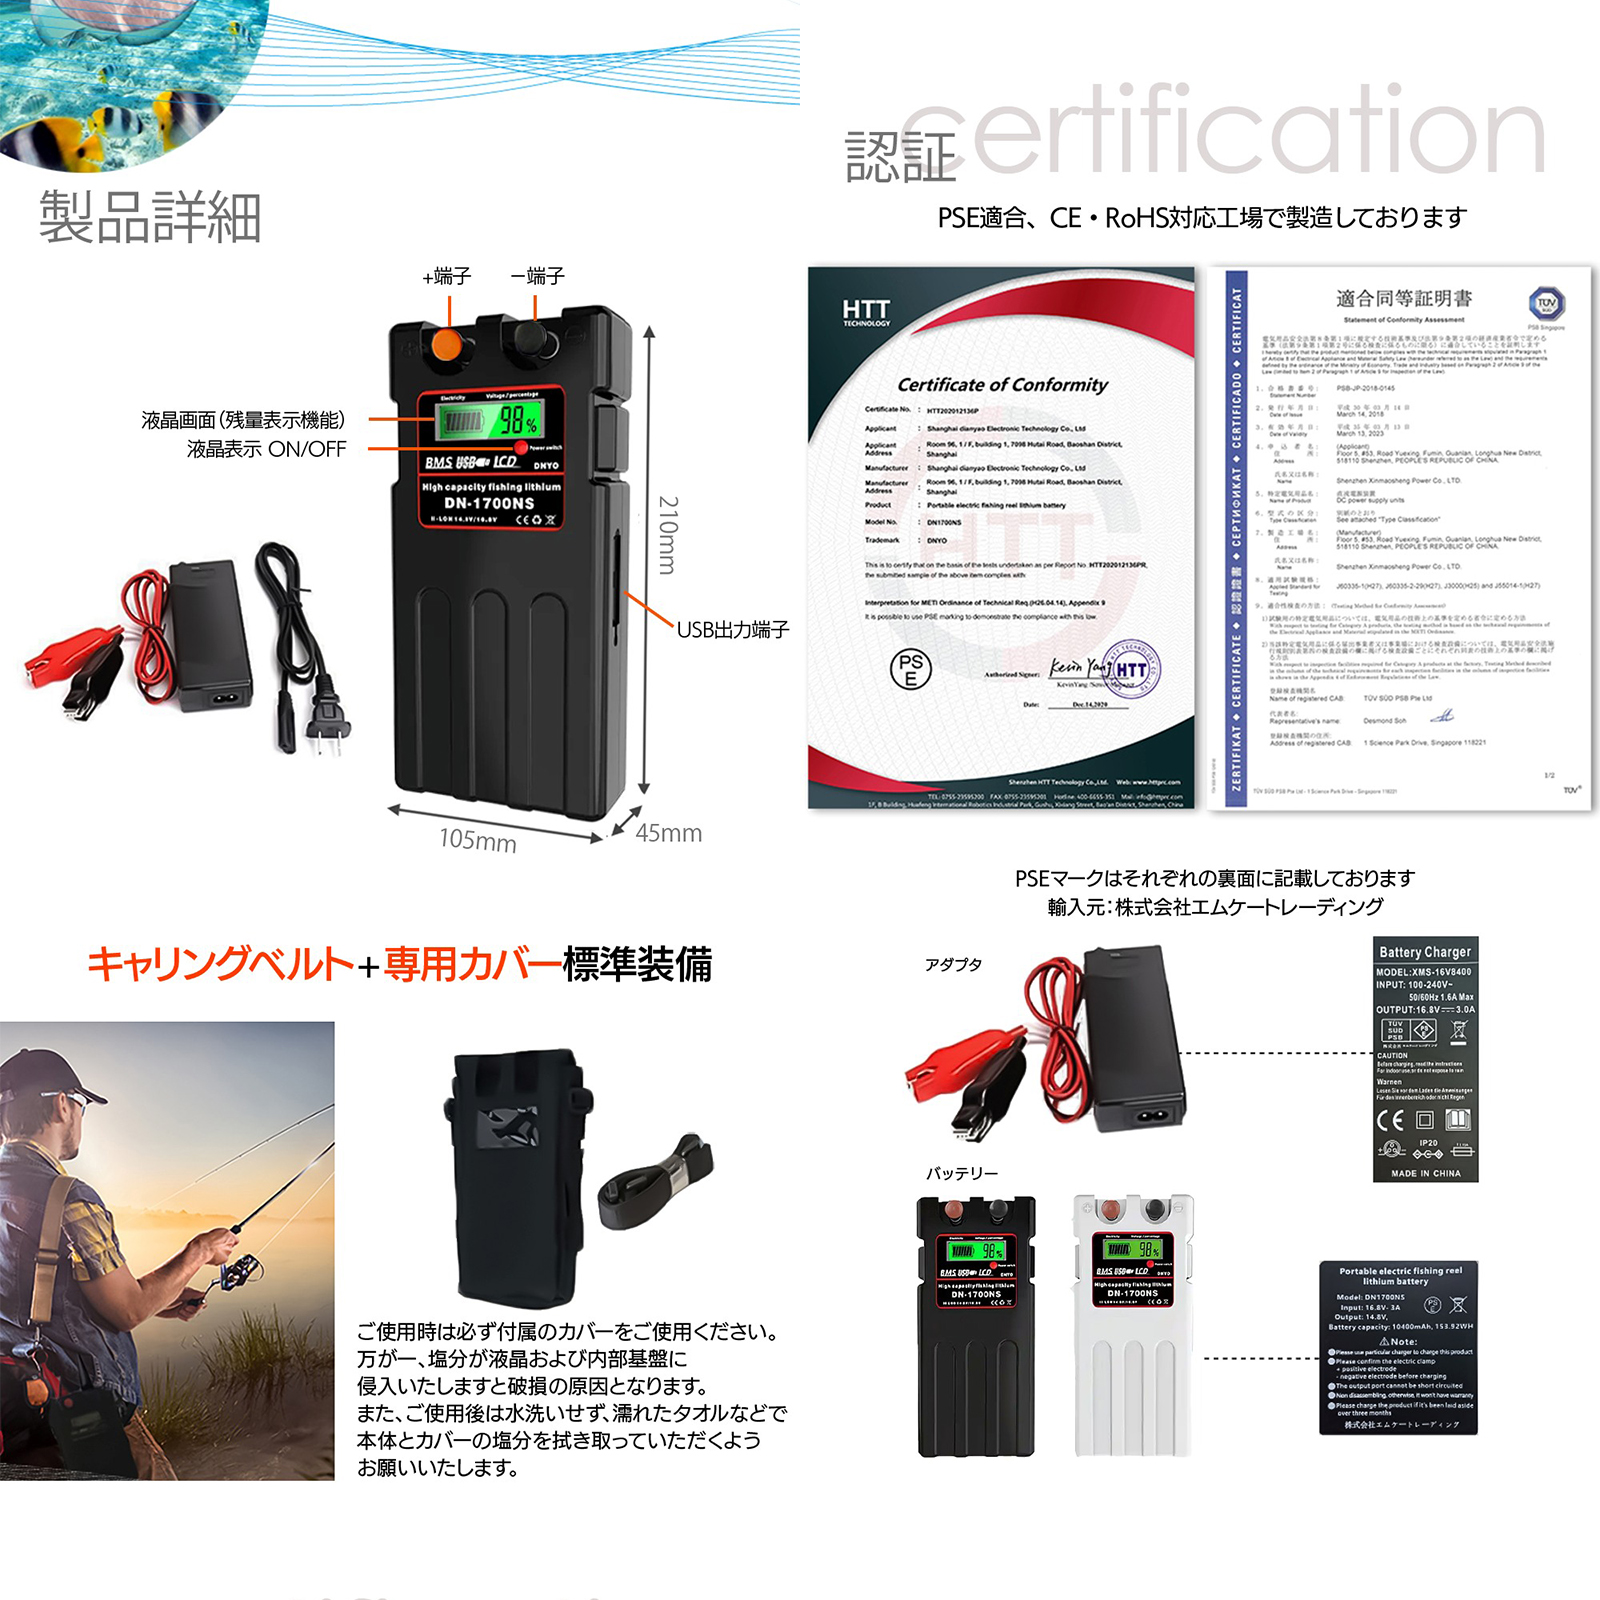  Daiwa Shimano electric reel for battery cover set 14.8V super high capacity 14000mAh Panasonic cell built-in 